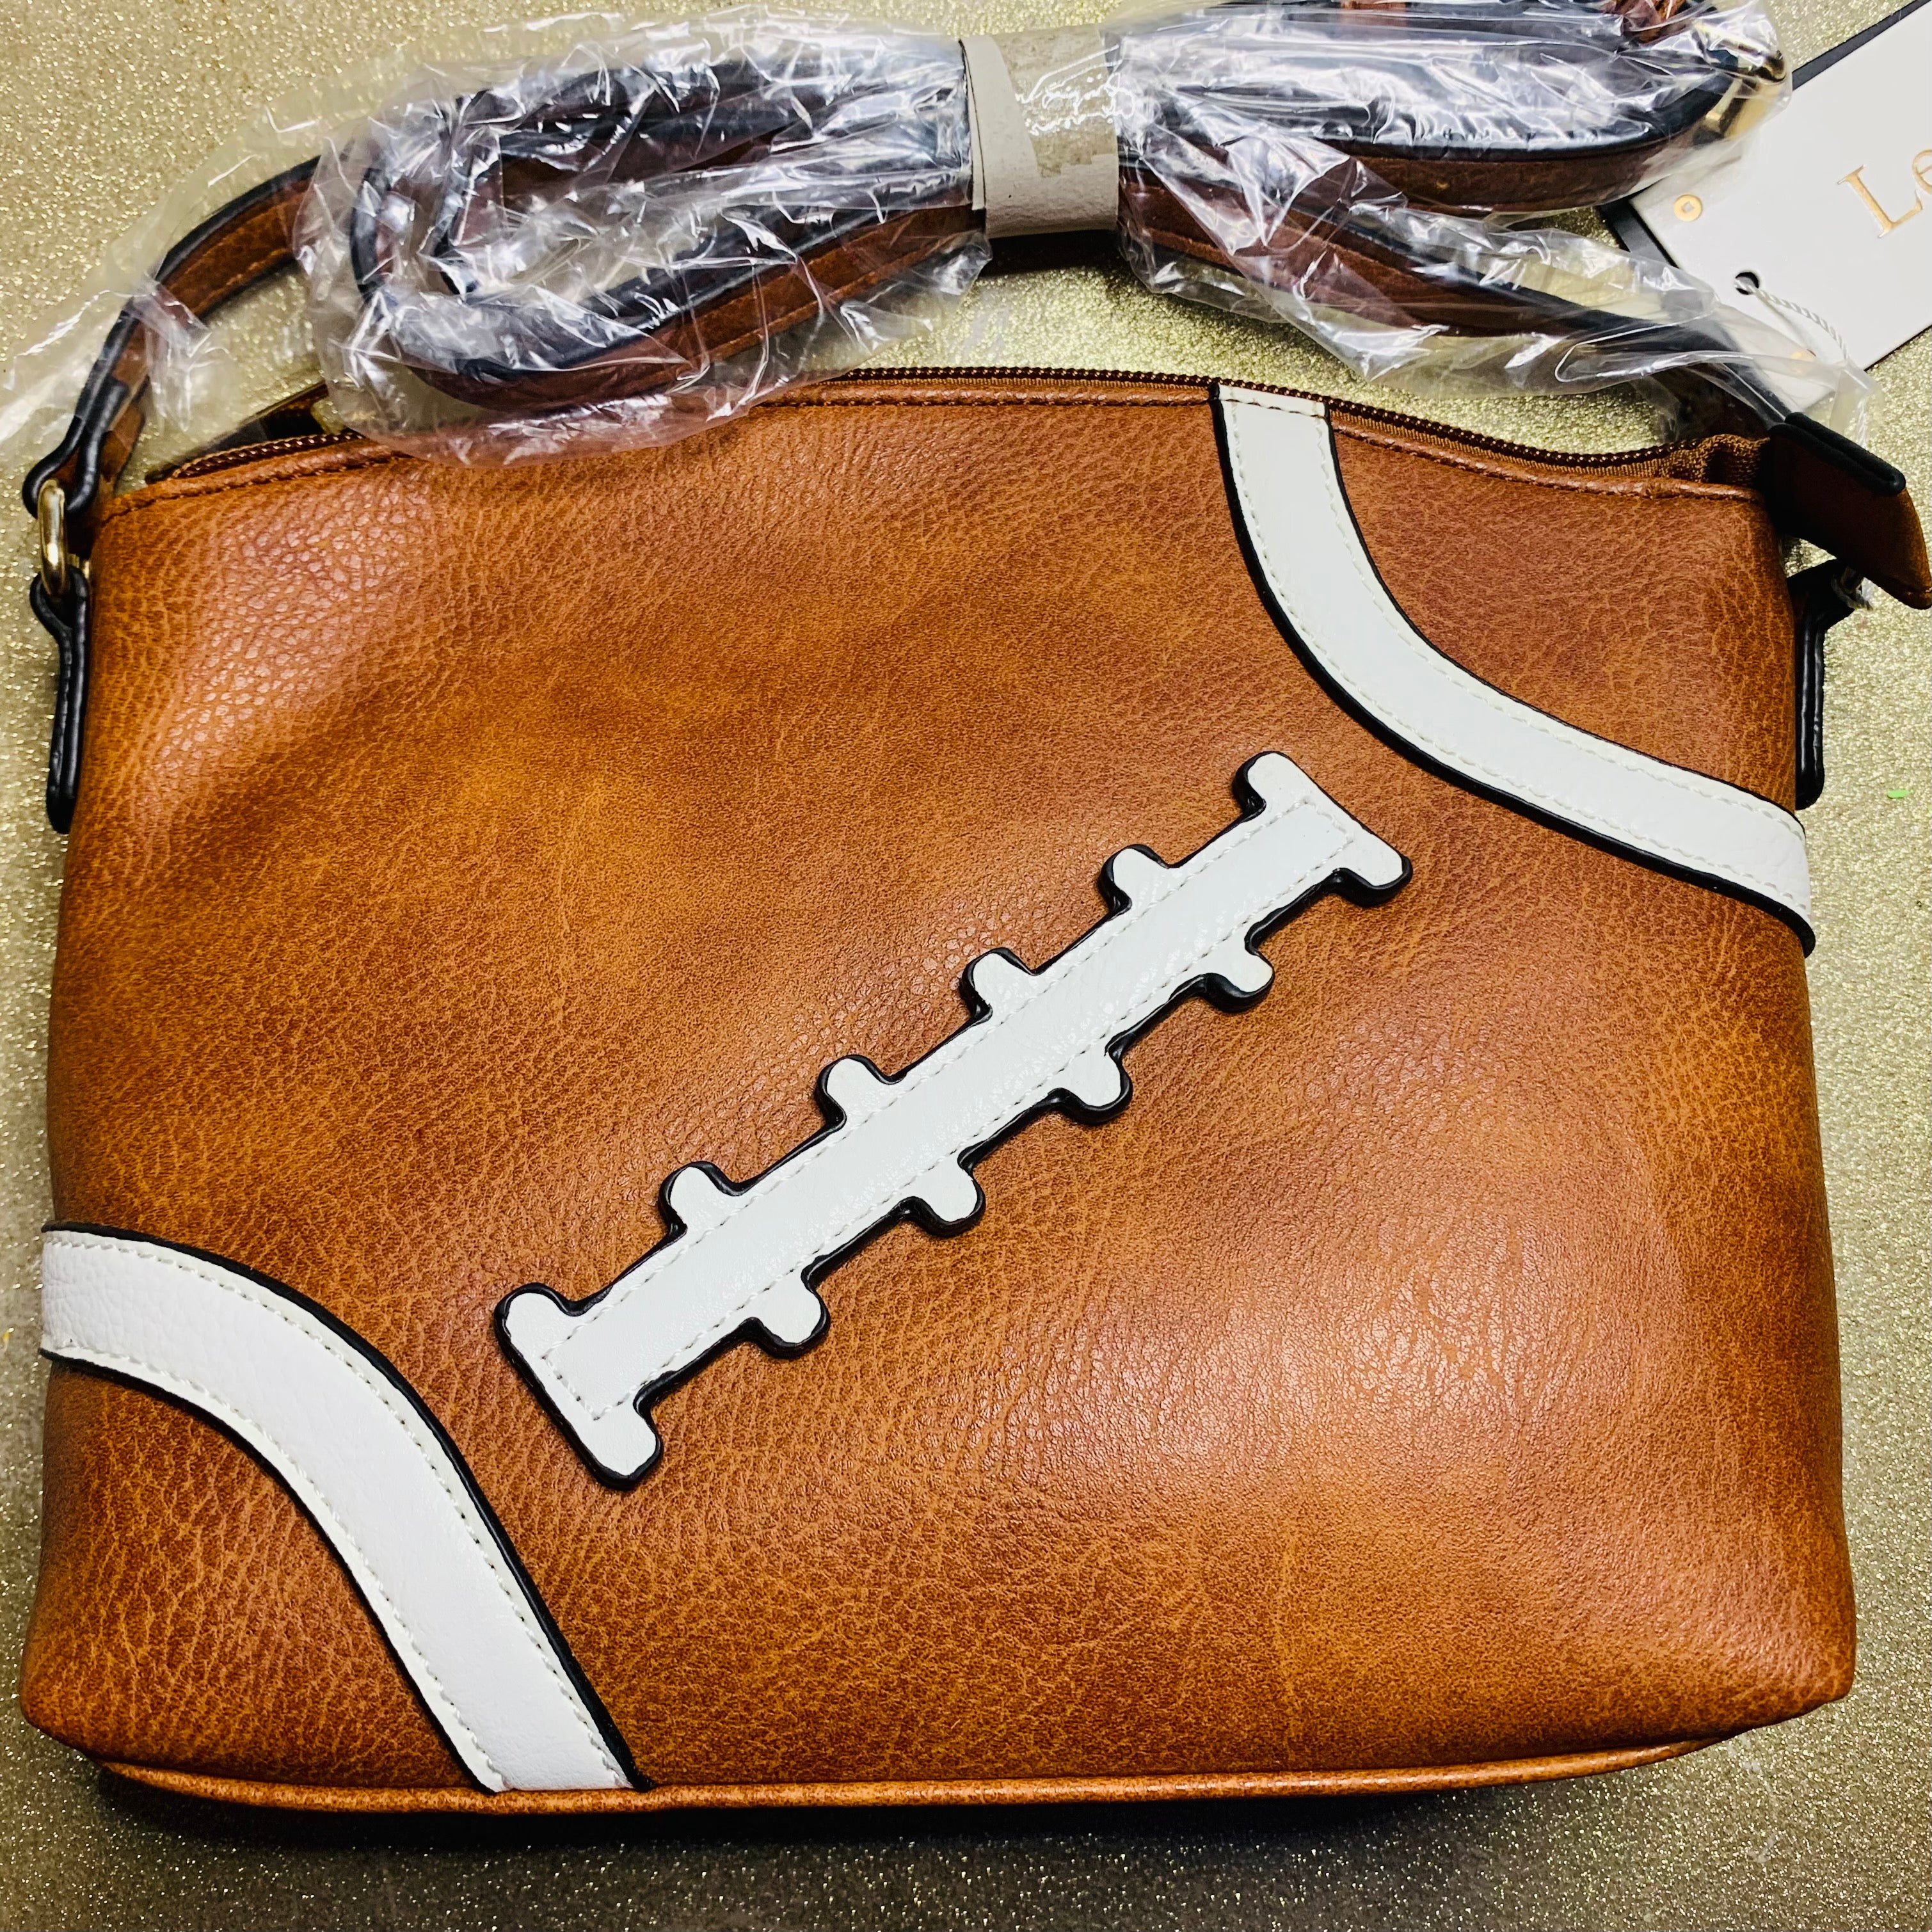 Crossbody Football purse